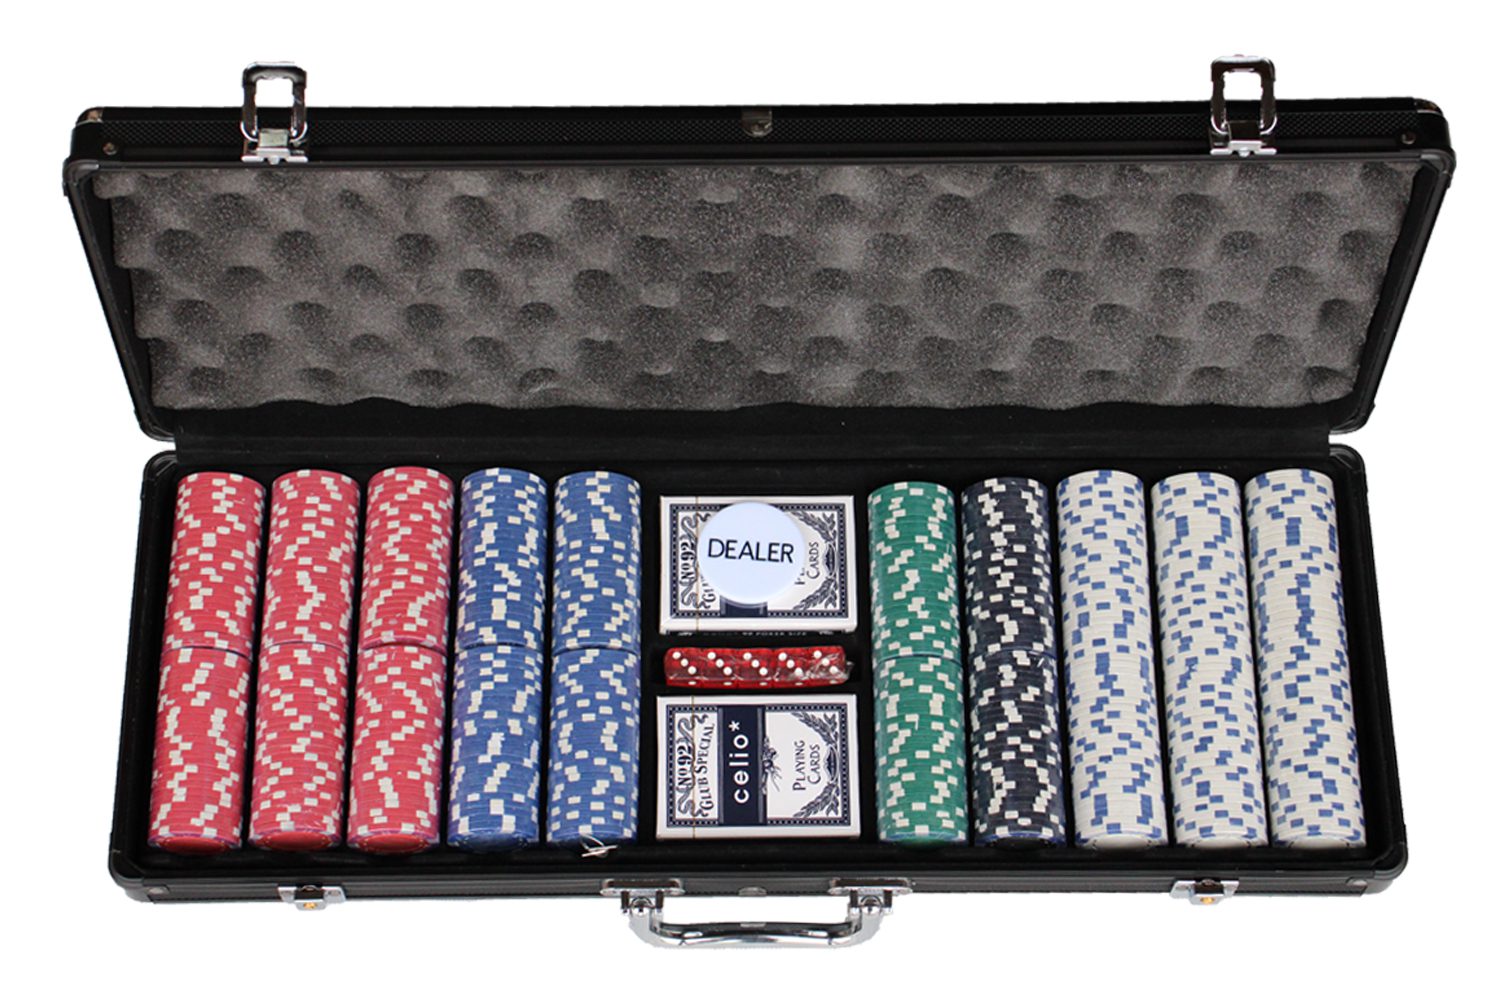 Technologie Geweldig collegegeld Pokerset aluminium Case 500 chips zwart | Snelle levering